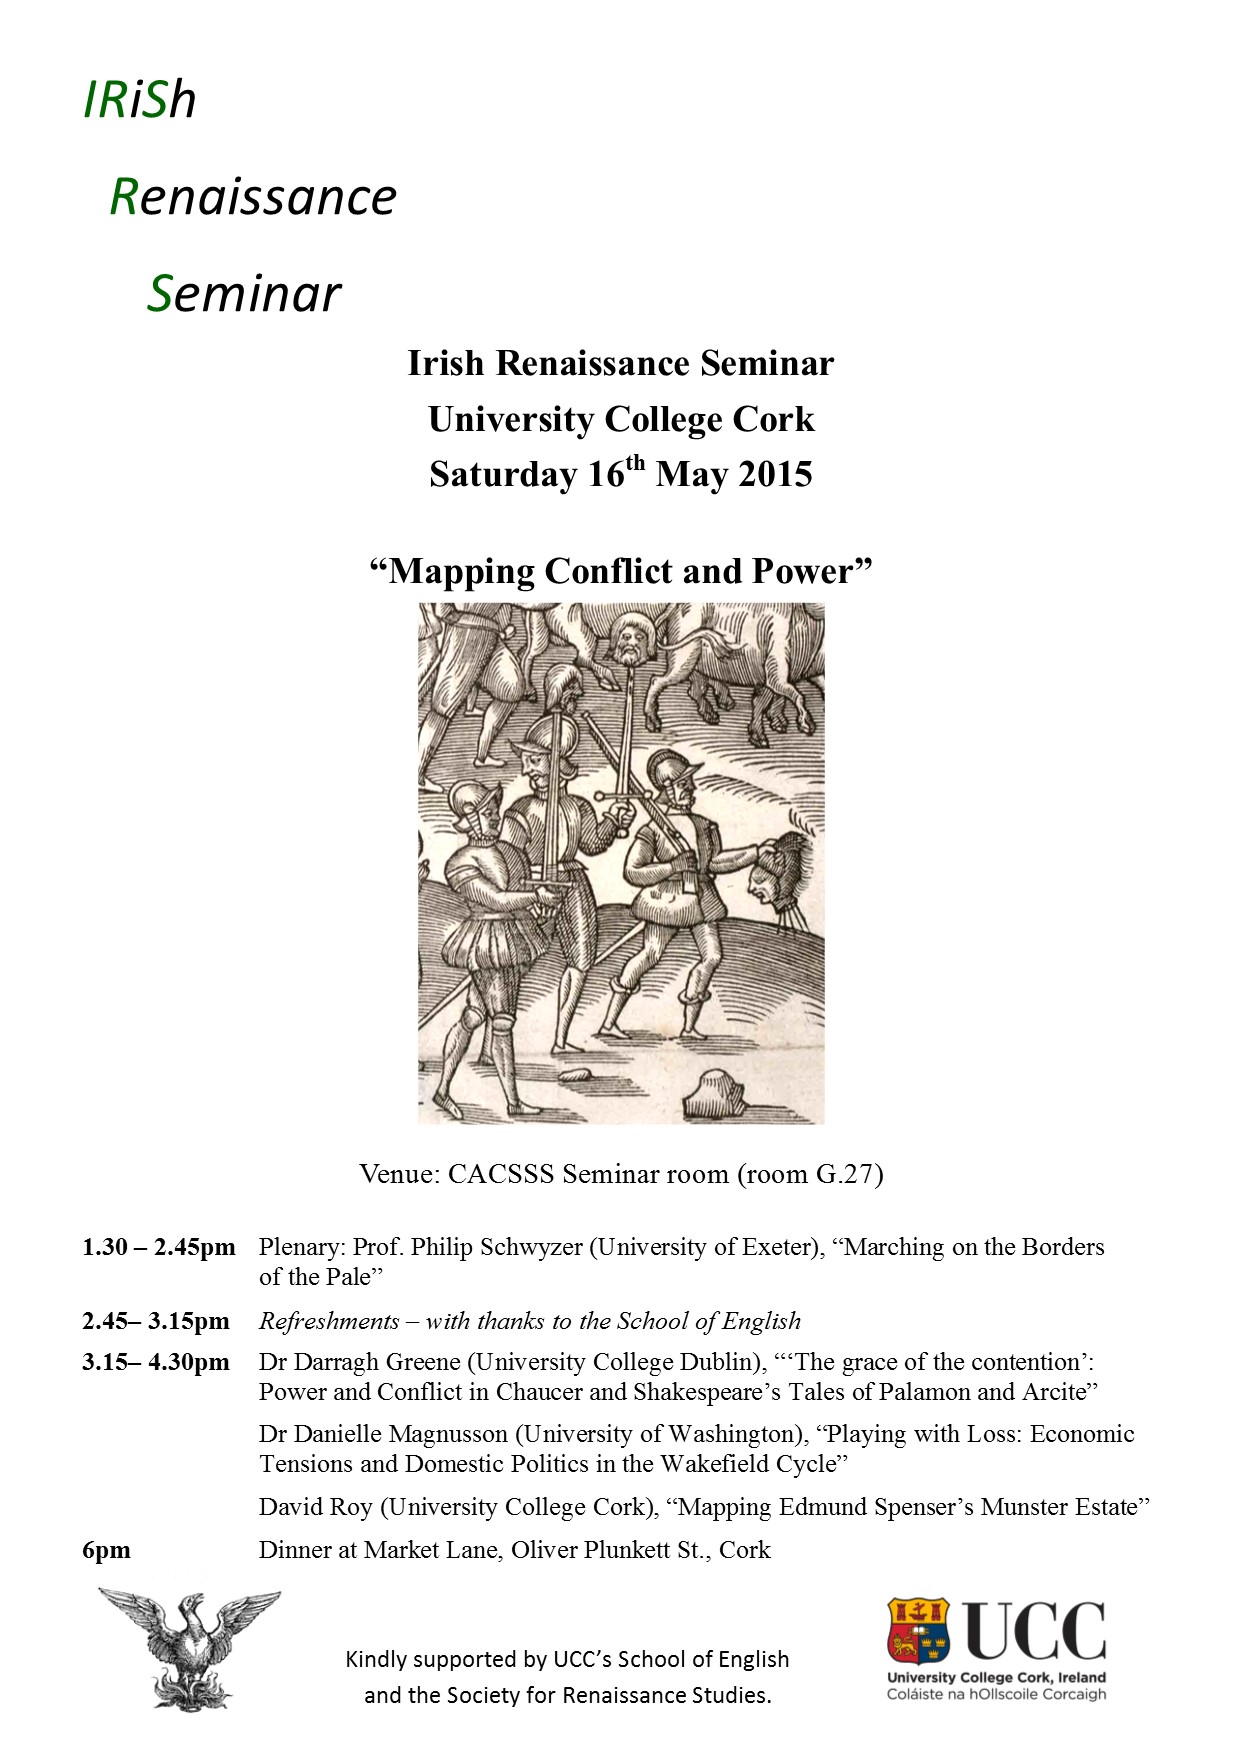 Irish Renaissance Seminar hosted by the School of English